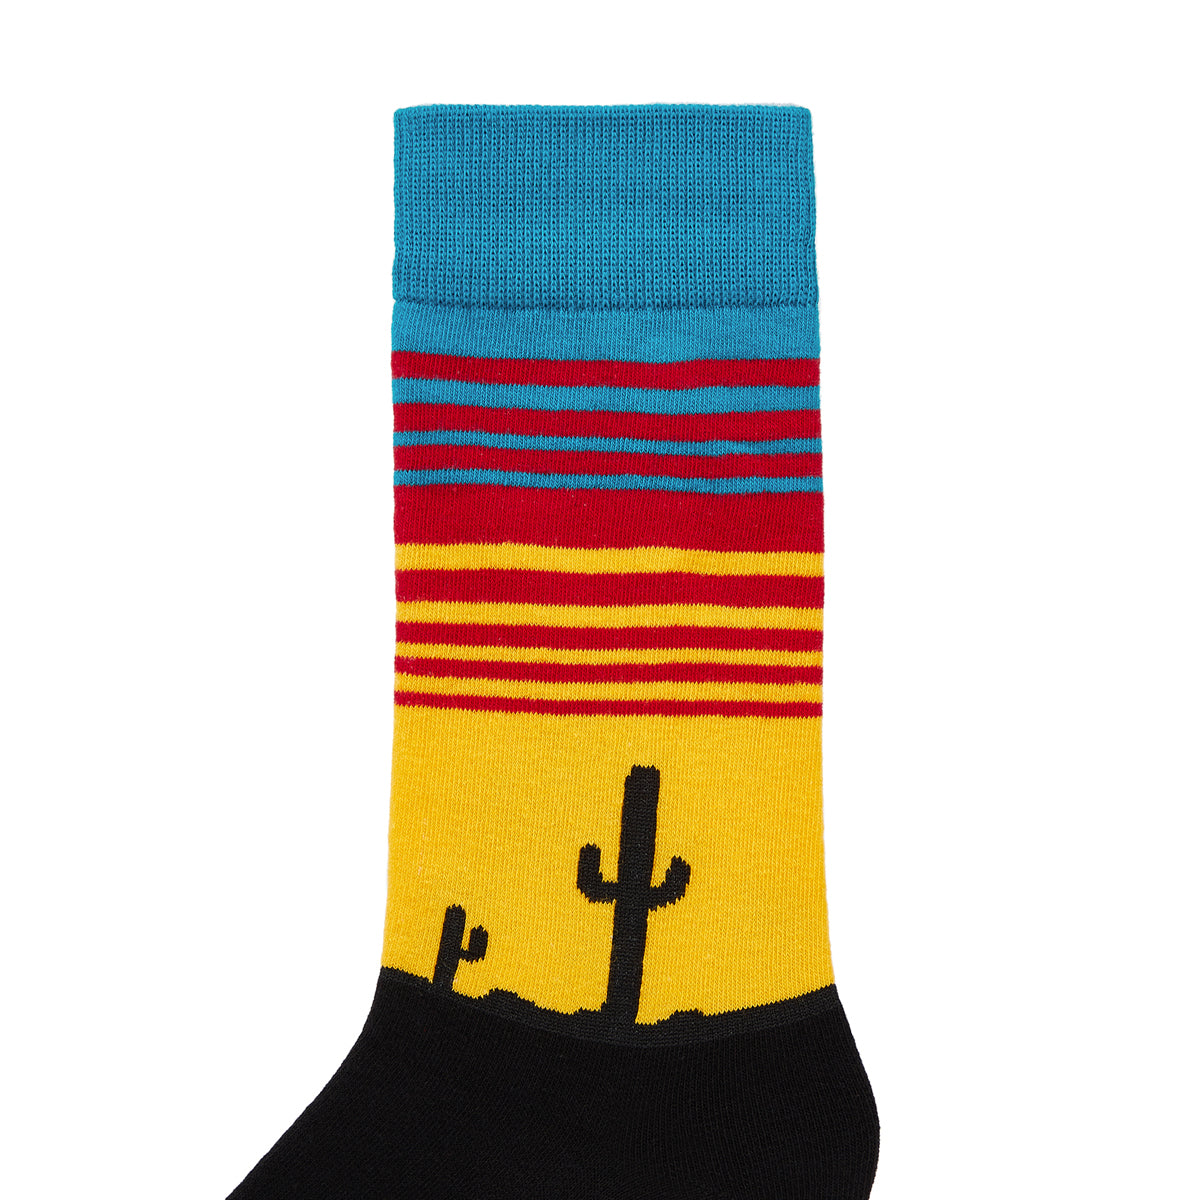 Cactus Printed Crew Length Socks - IDENTITY Apparel Shop